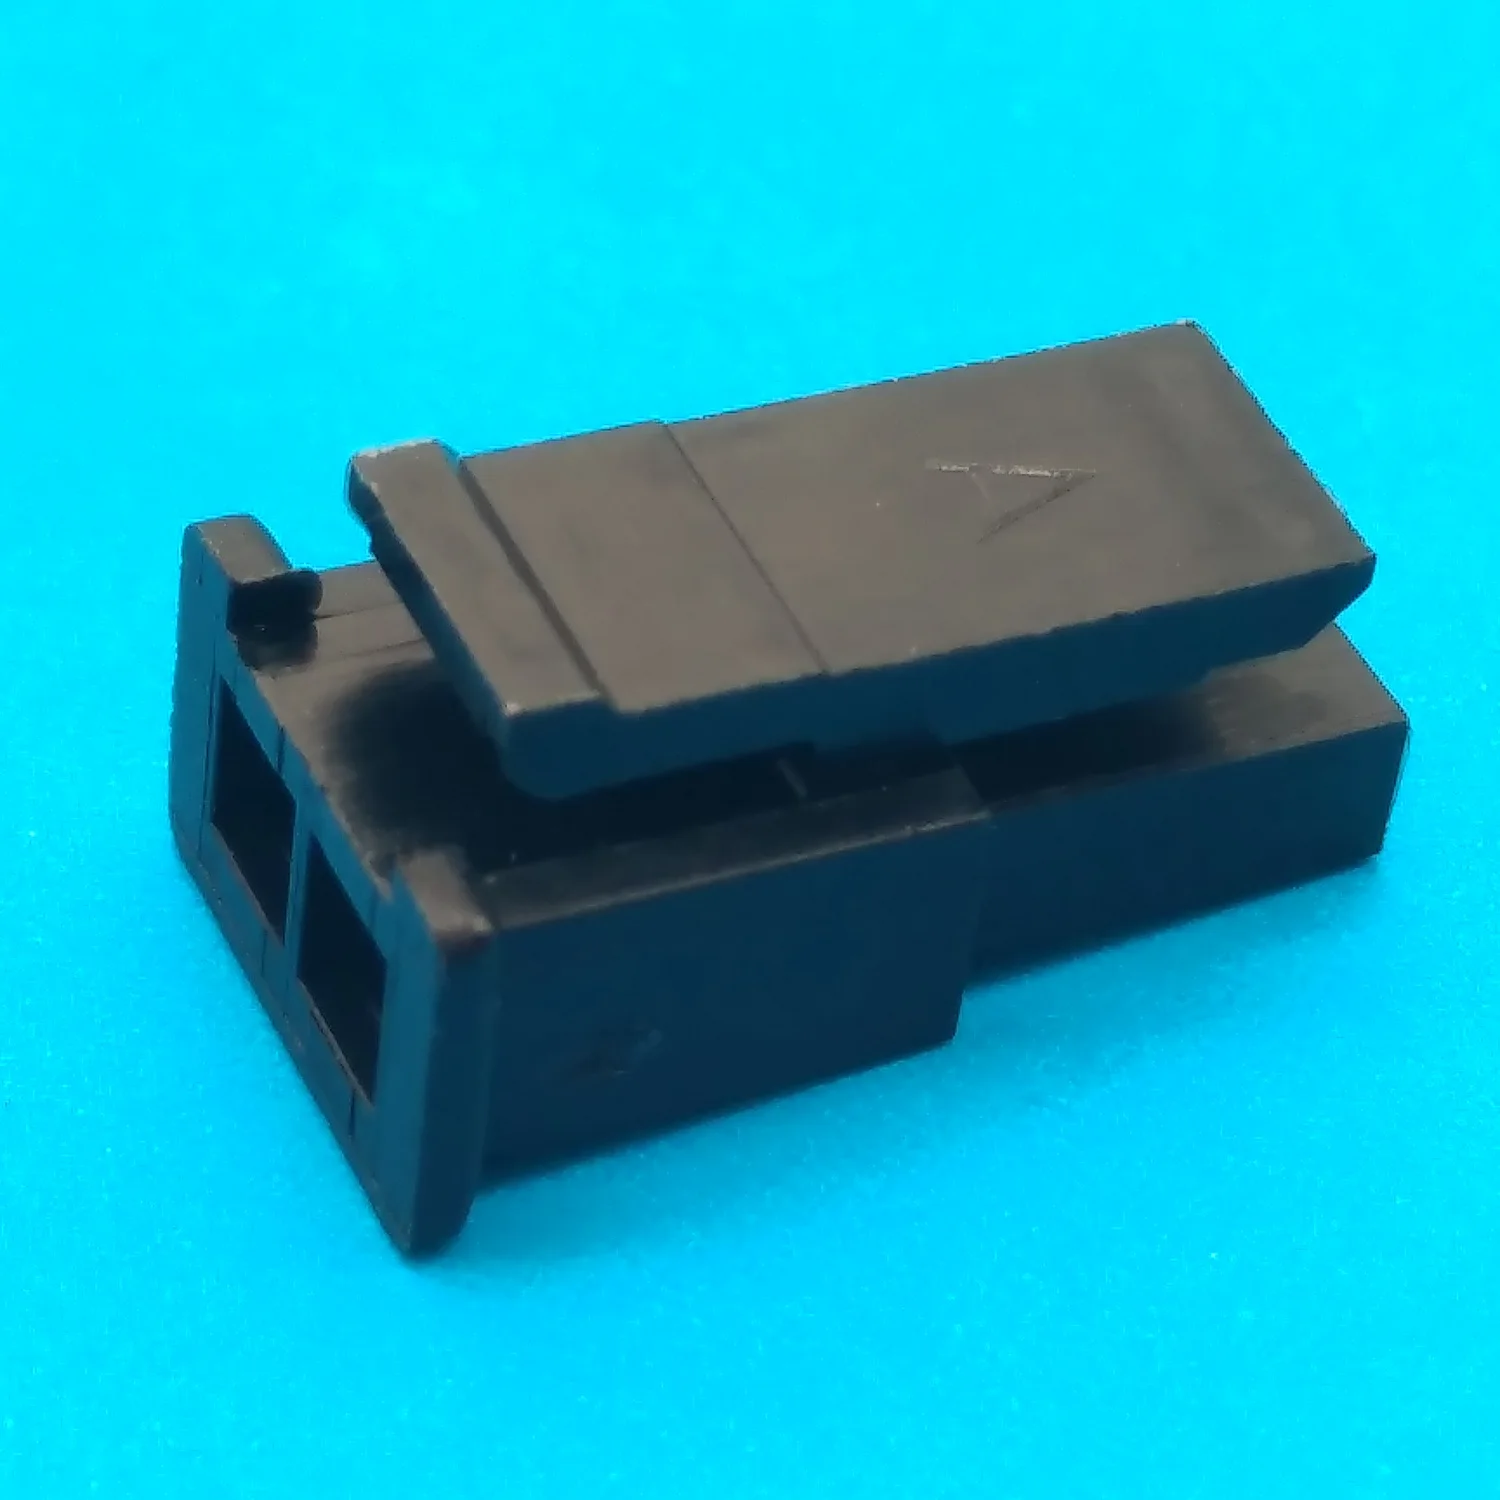 2 pin molex connector kit